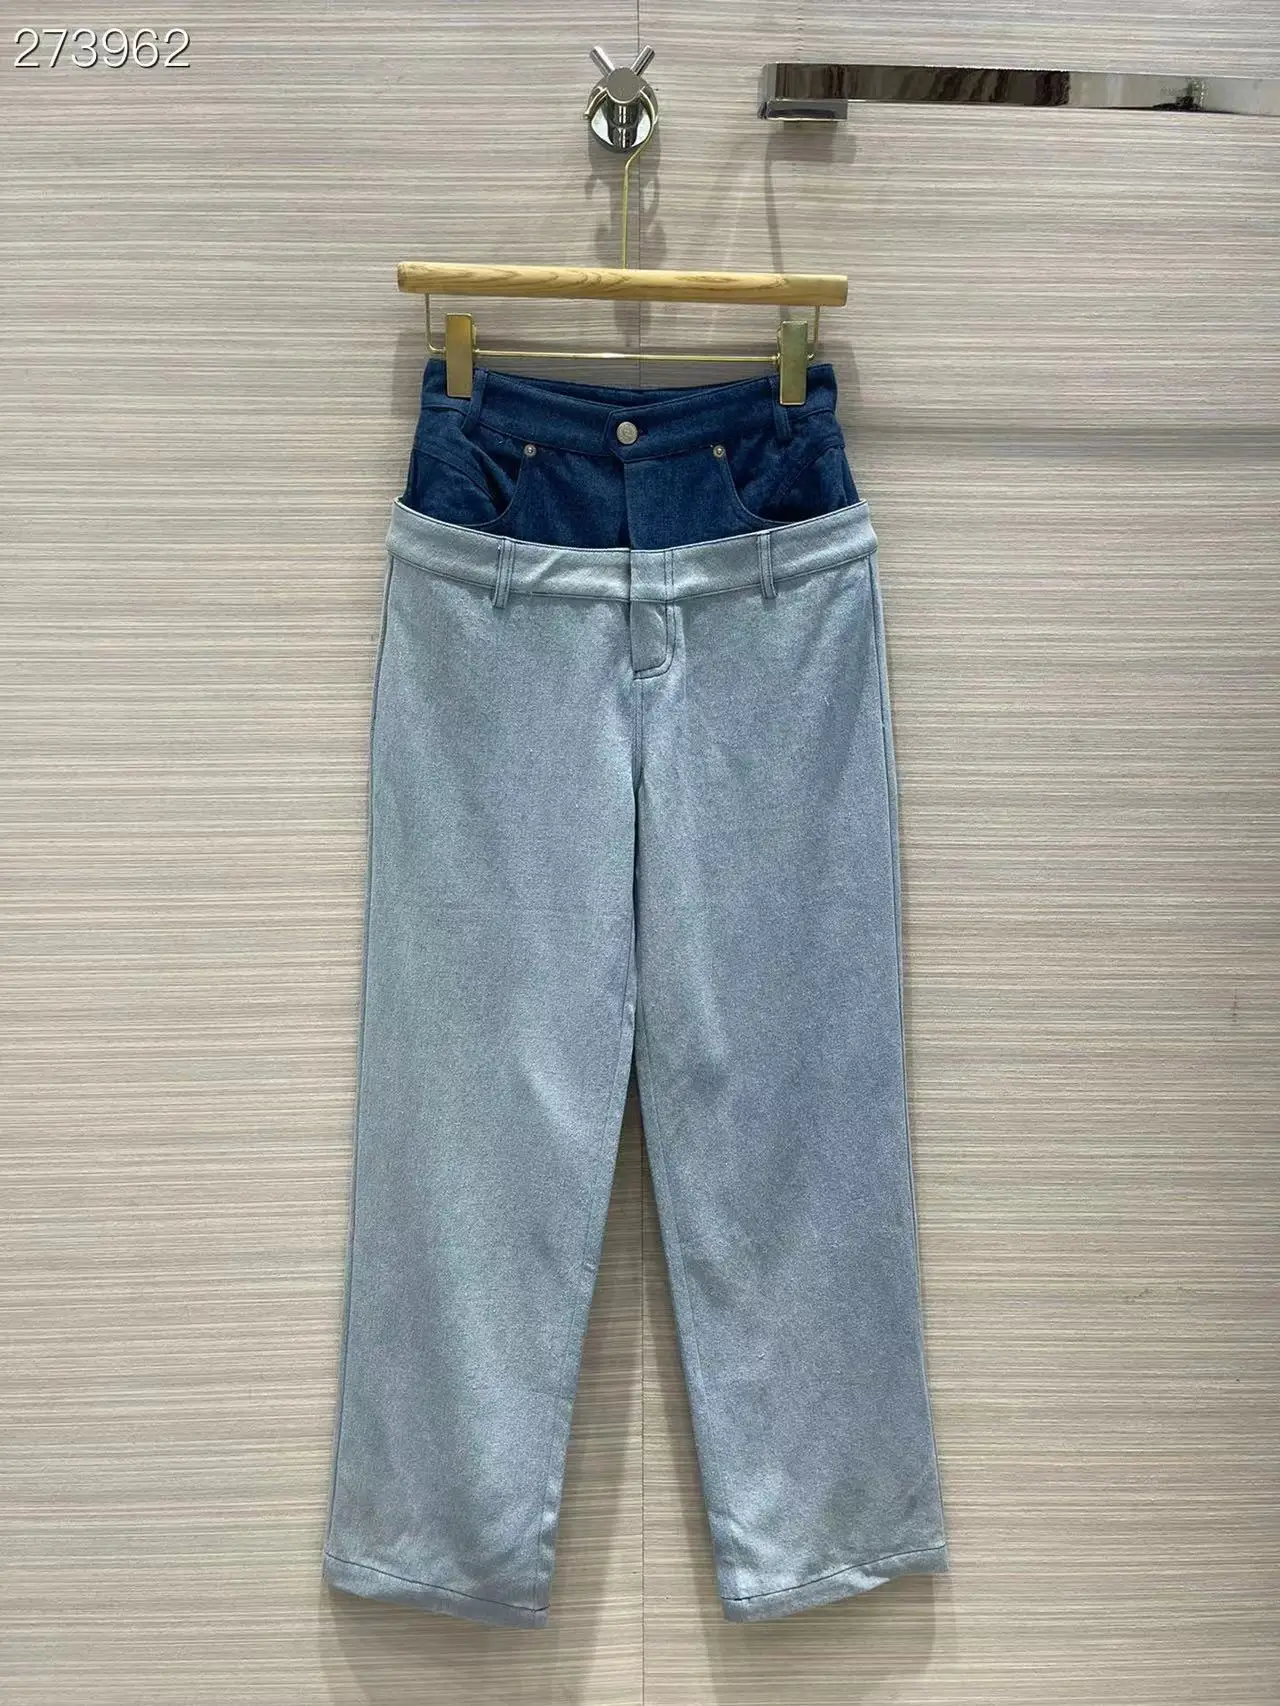 Fyion High Quality Women's Top Jeans Pants Fashion Runway Casual Long Denim Color Patchwork Wide Leg Pants Summer 2022 Design